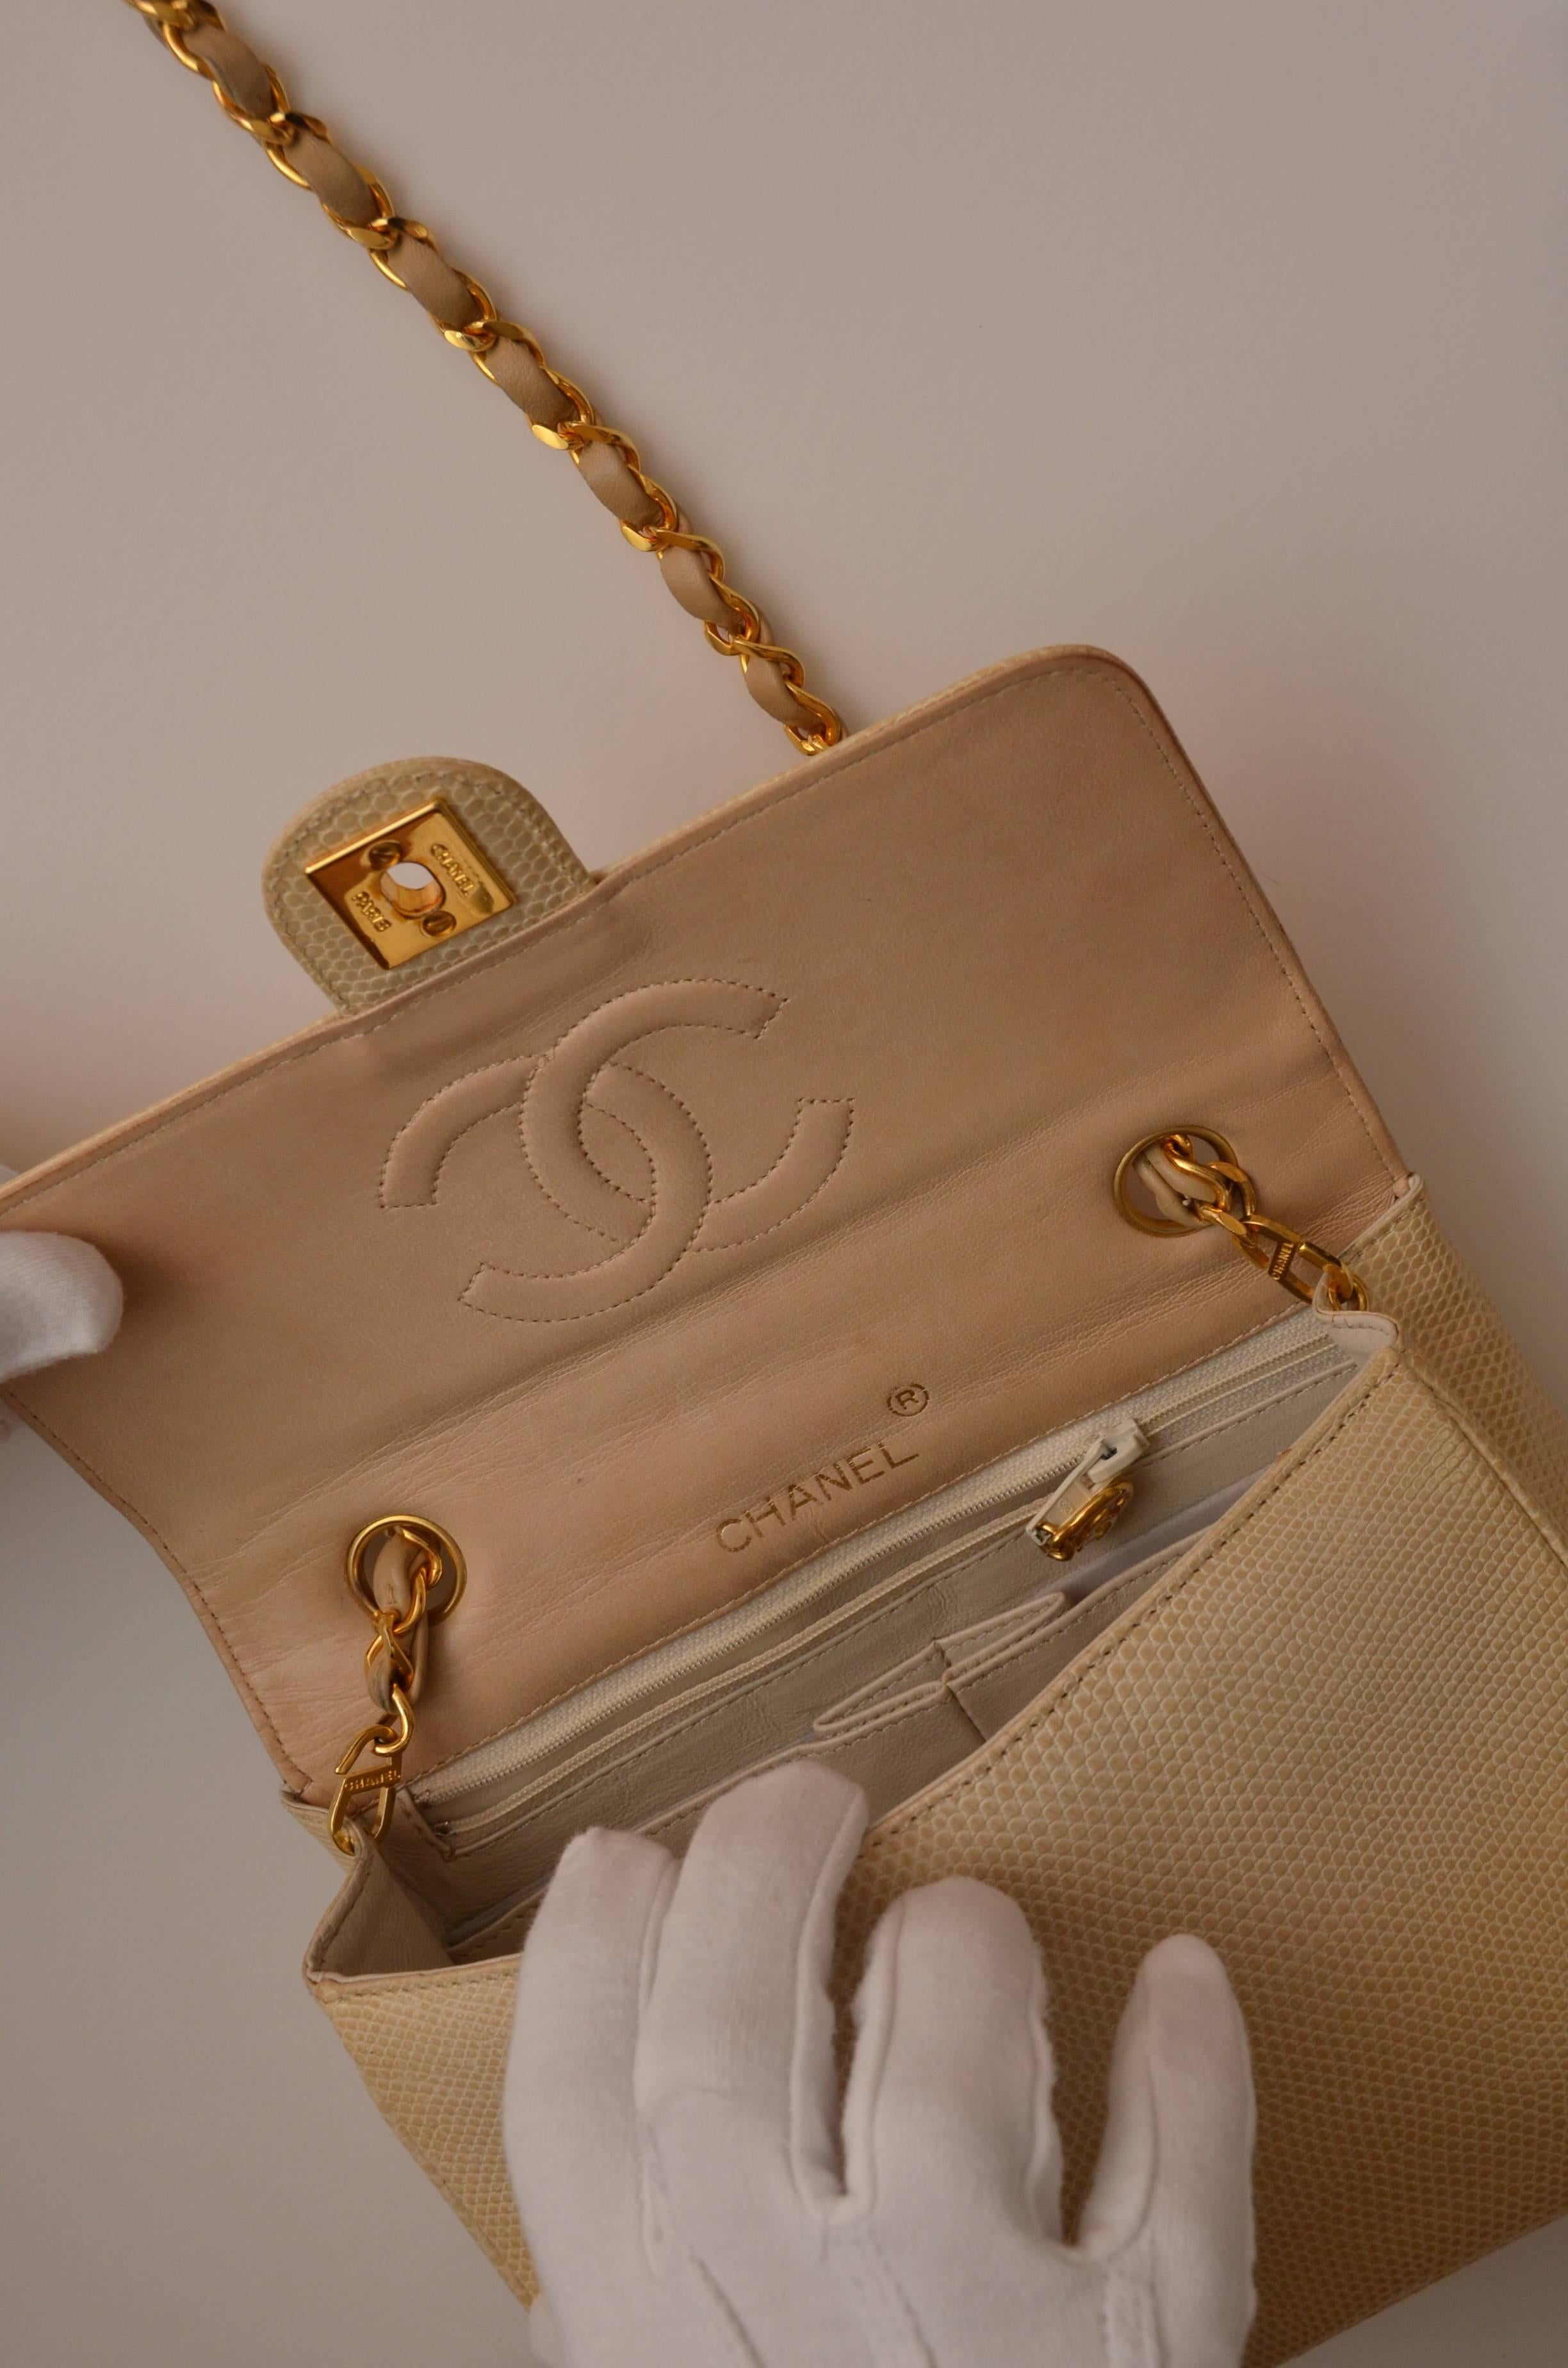 Chanel Mini Lizard Handbag, 1990s     2